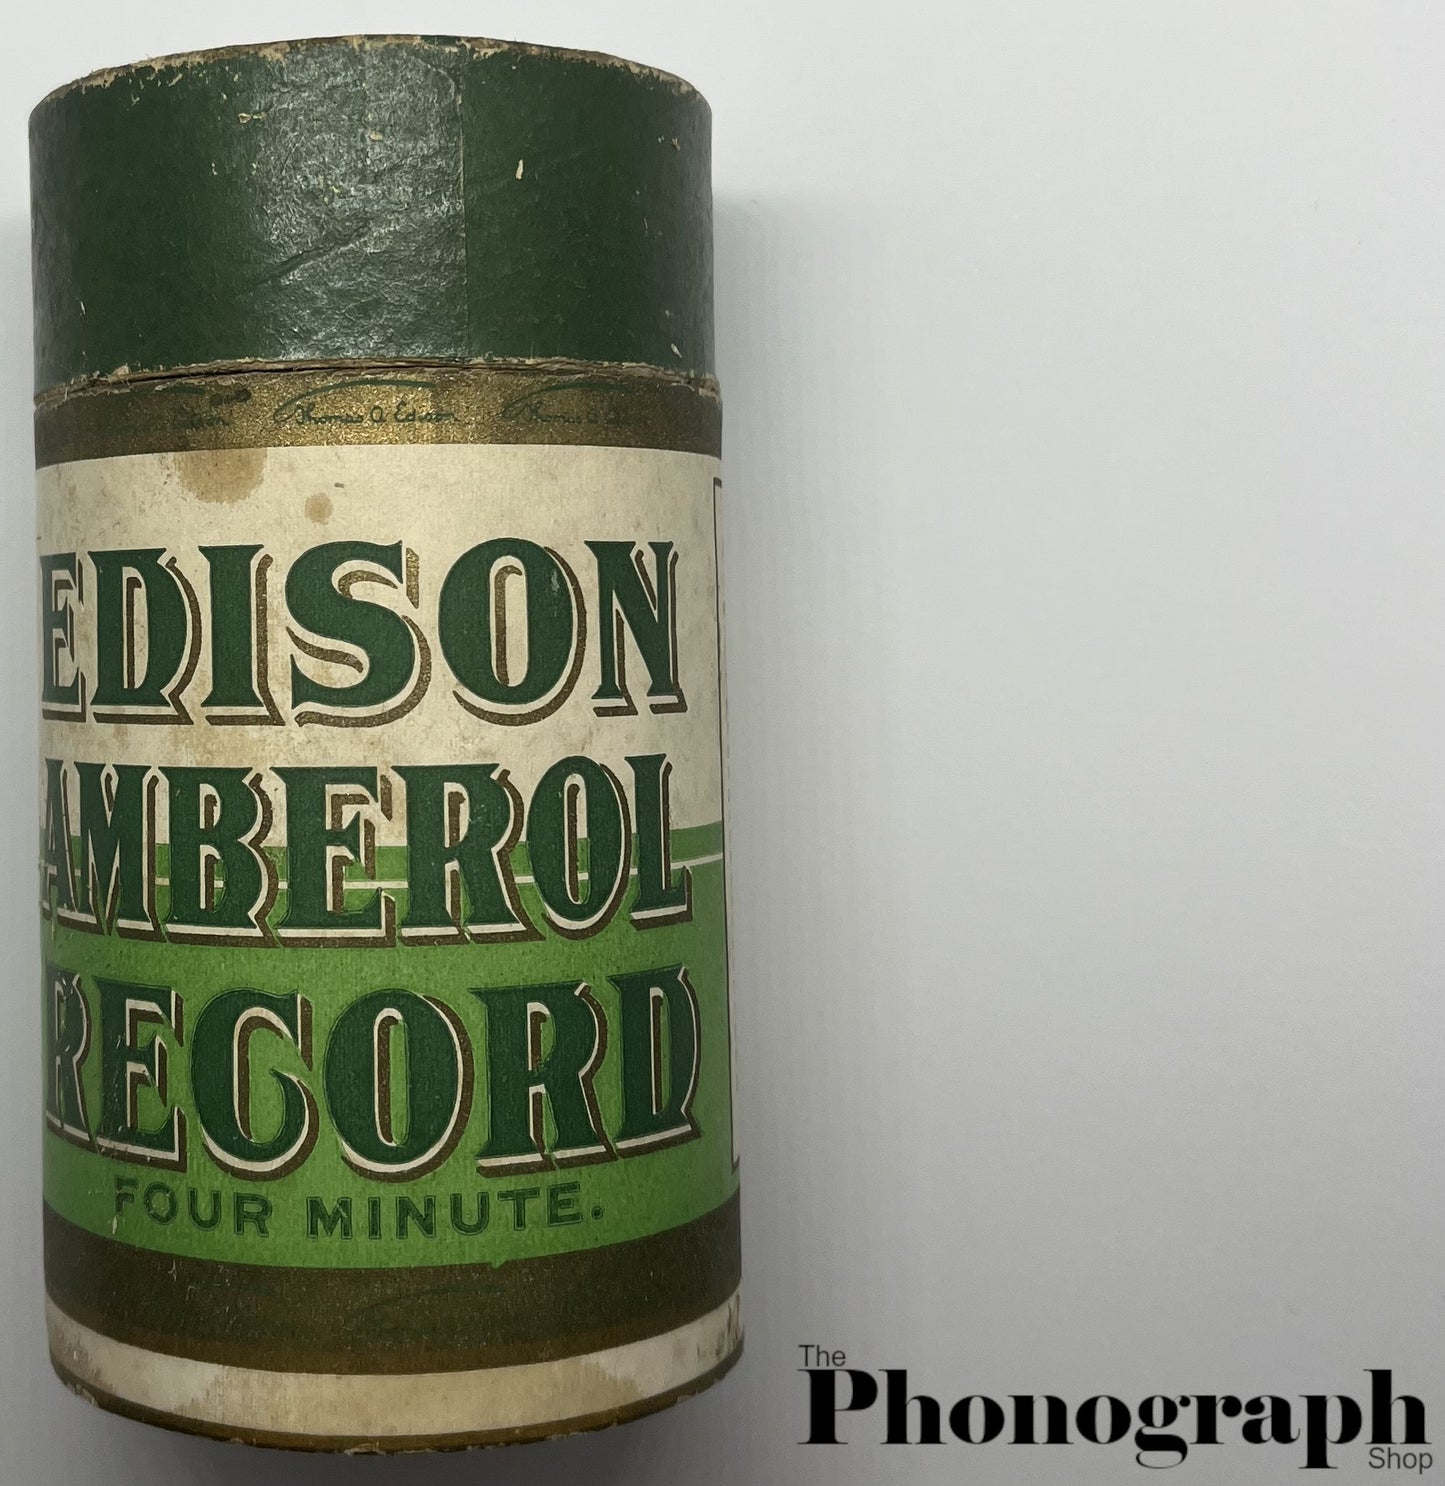 Edison Amberol Cylinder Record Box - Empty (AM001) "Certified Original"